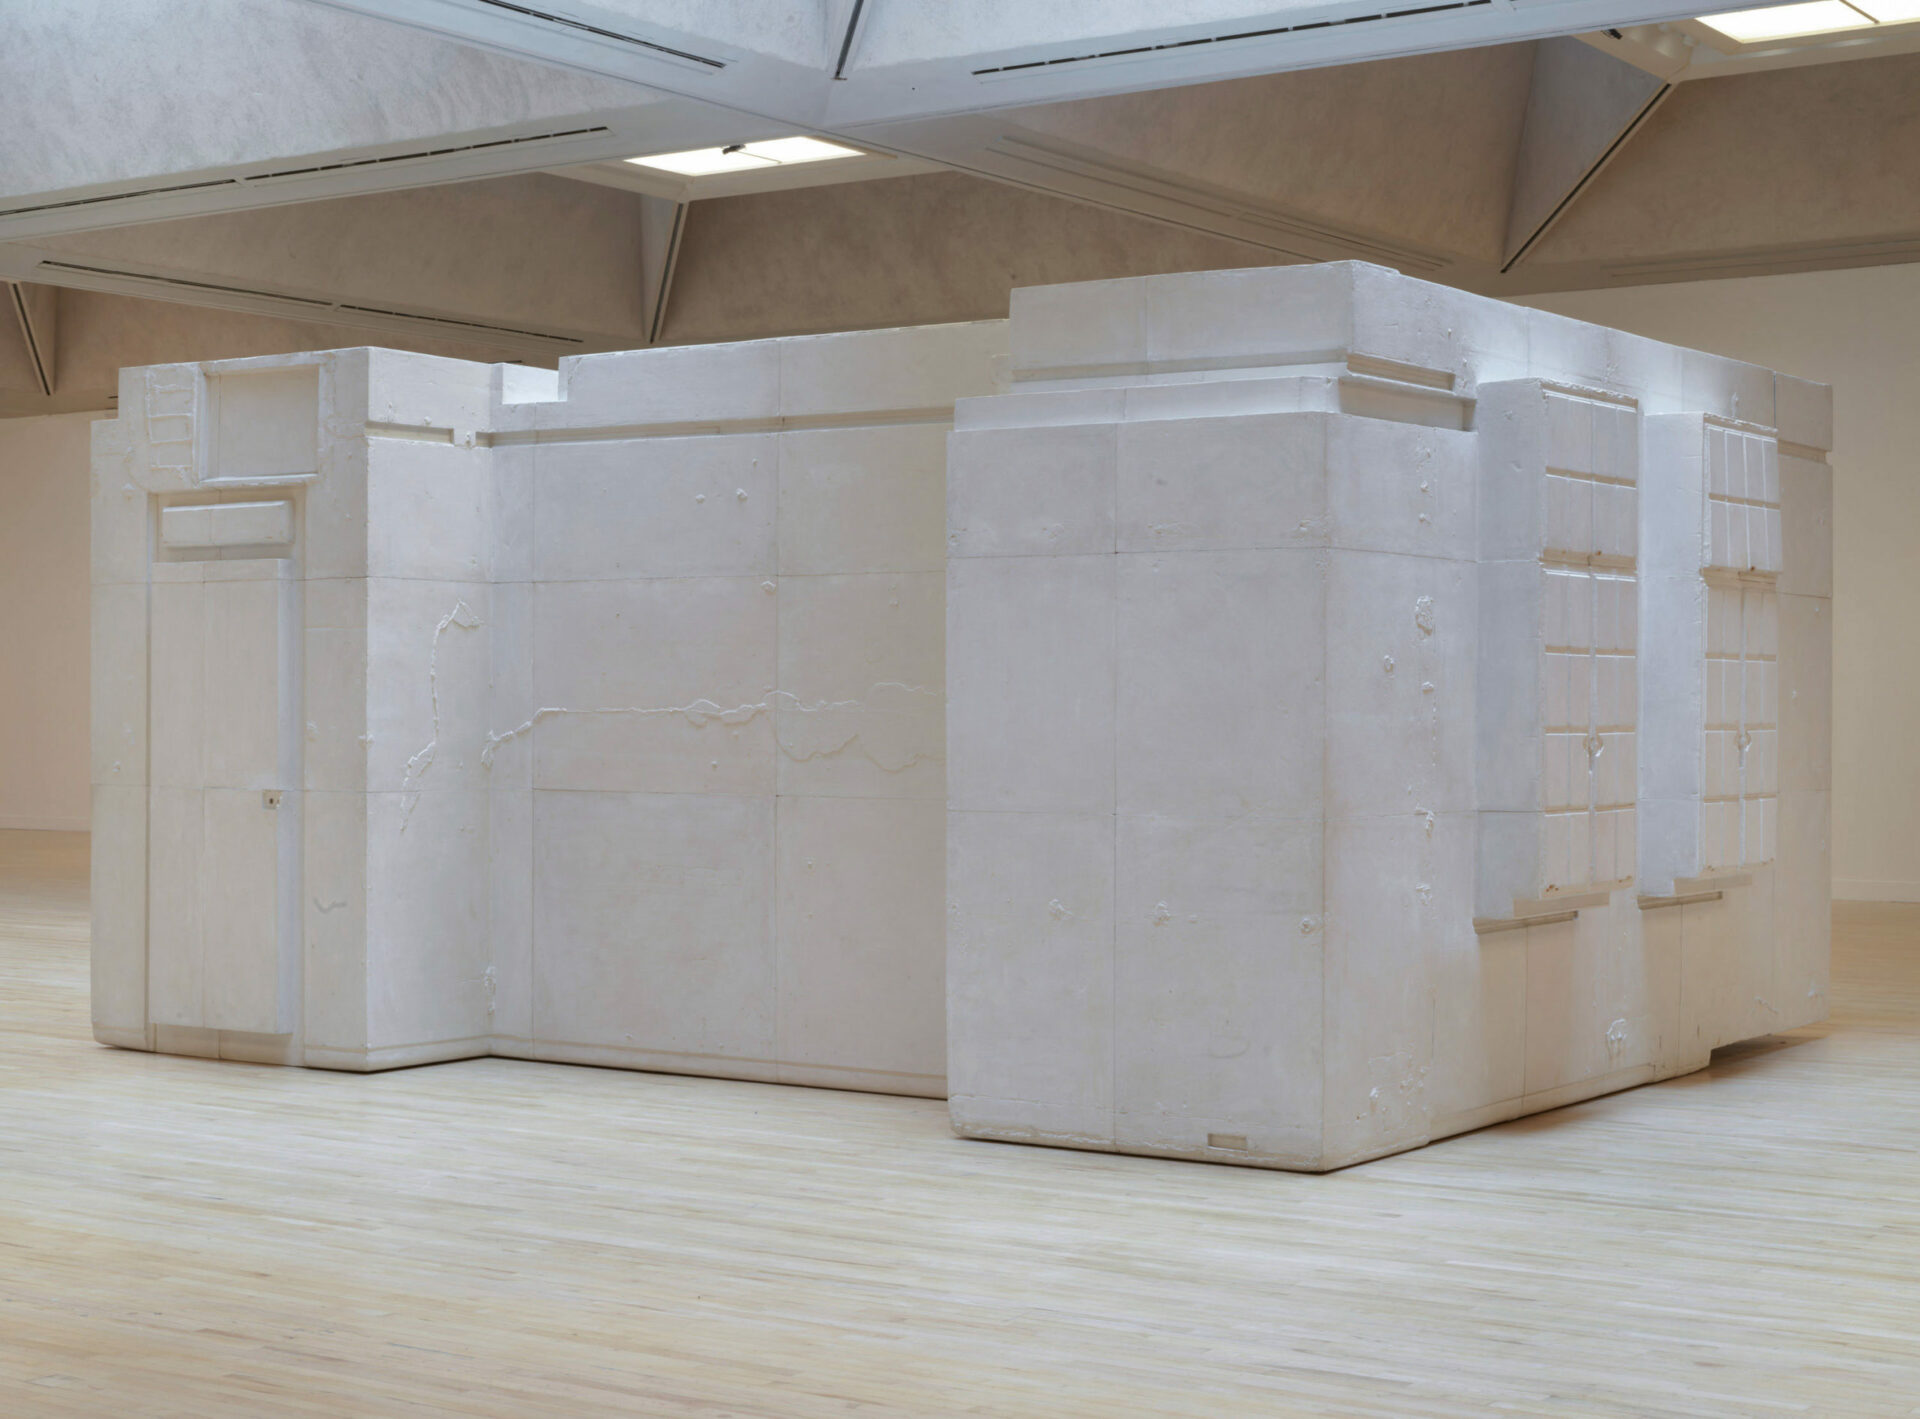 Rachel Whiteread's 'Room 101', Tate Britain.